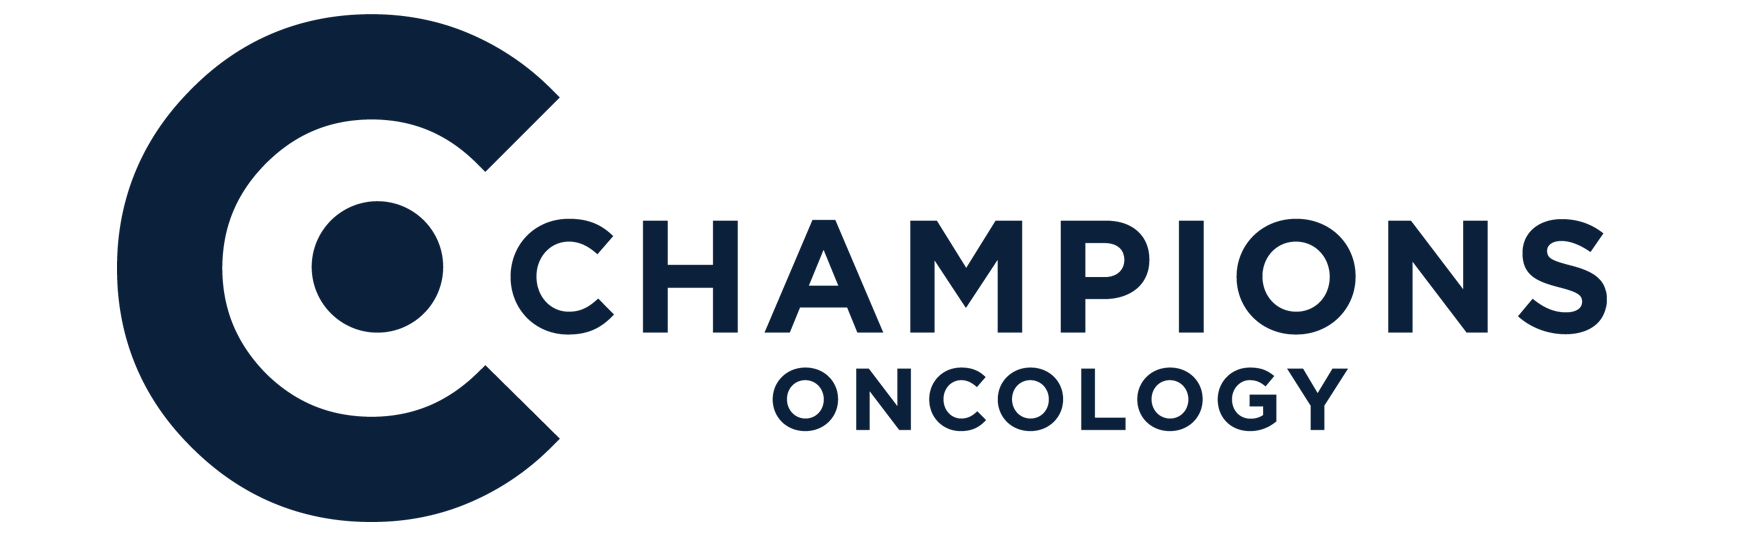 Champions Logo Dk Blue